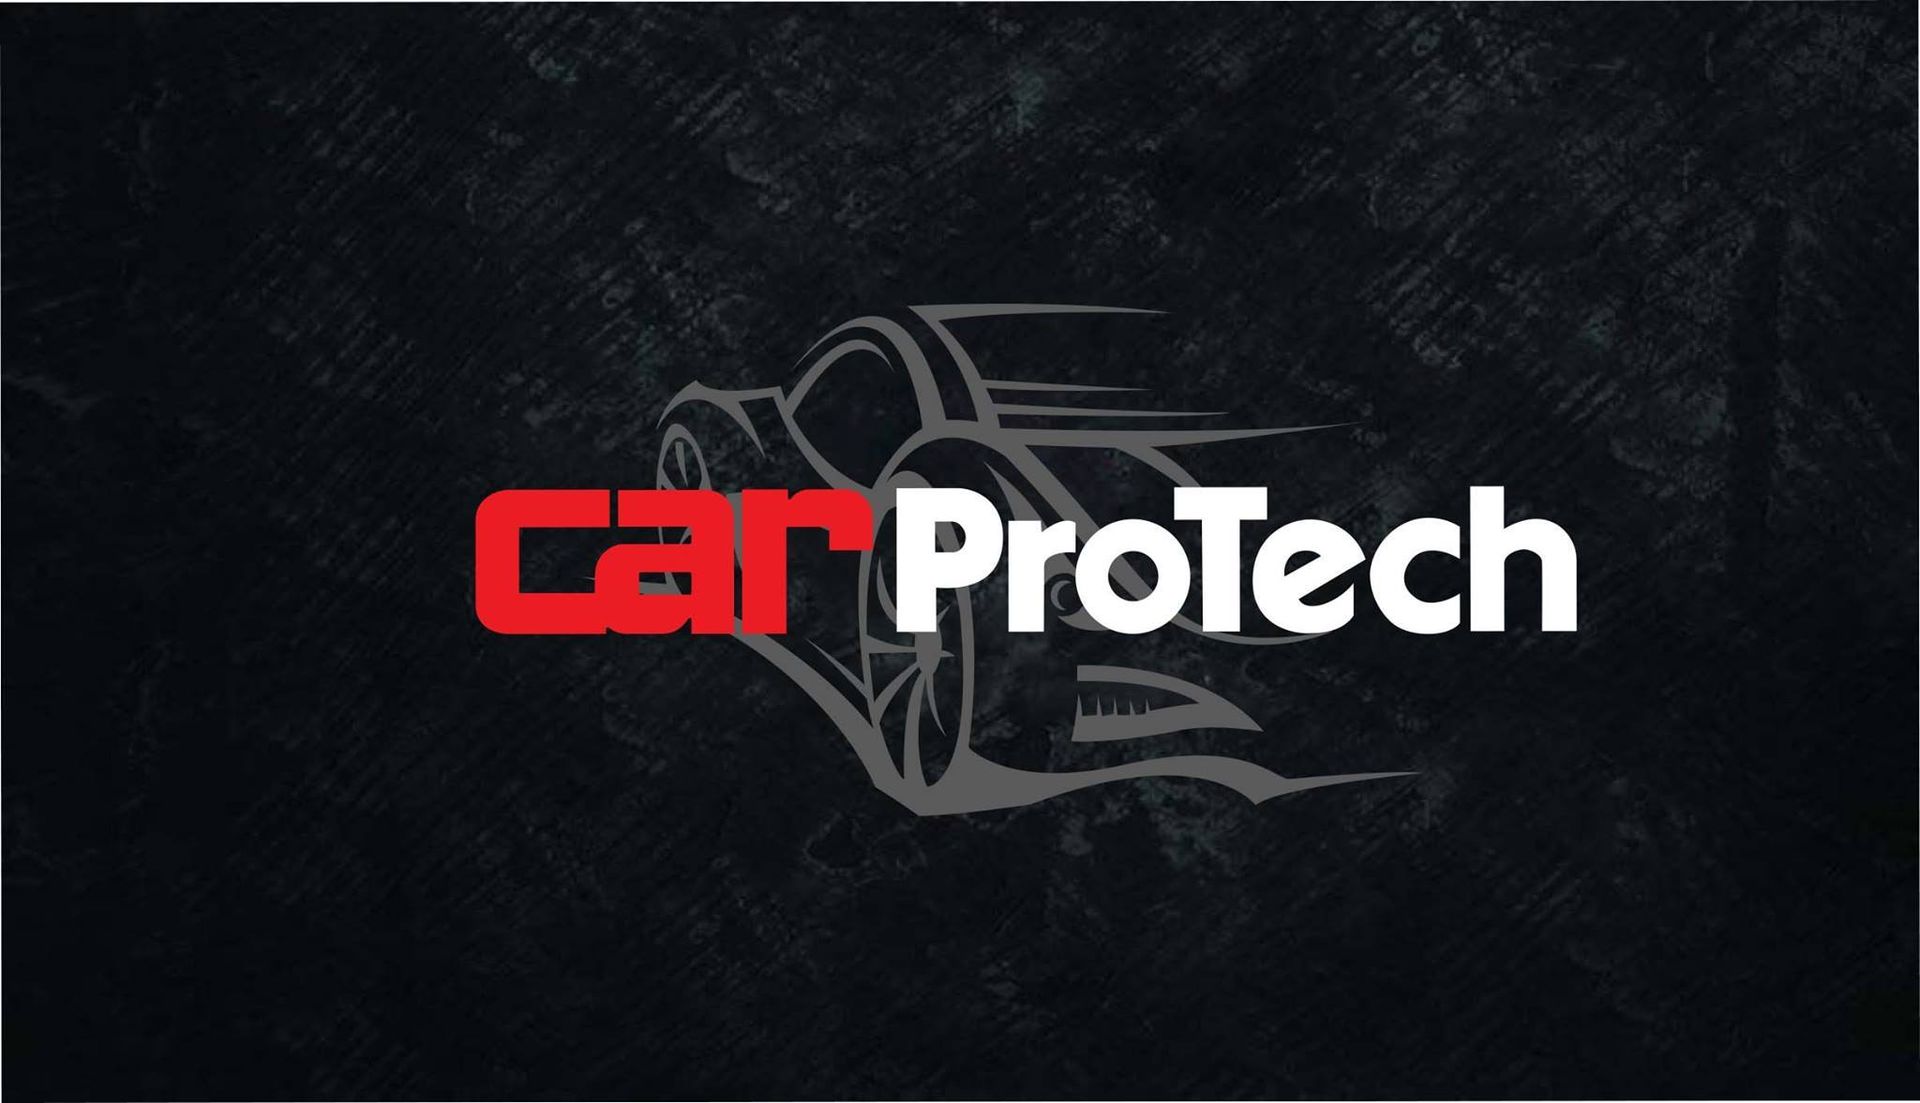 CAR PROTECH